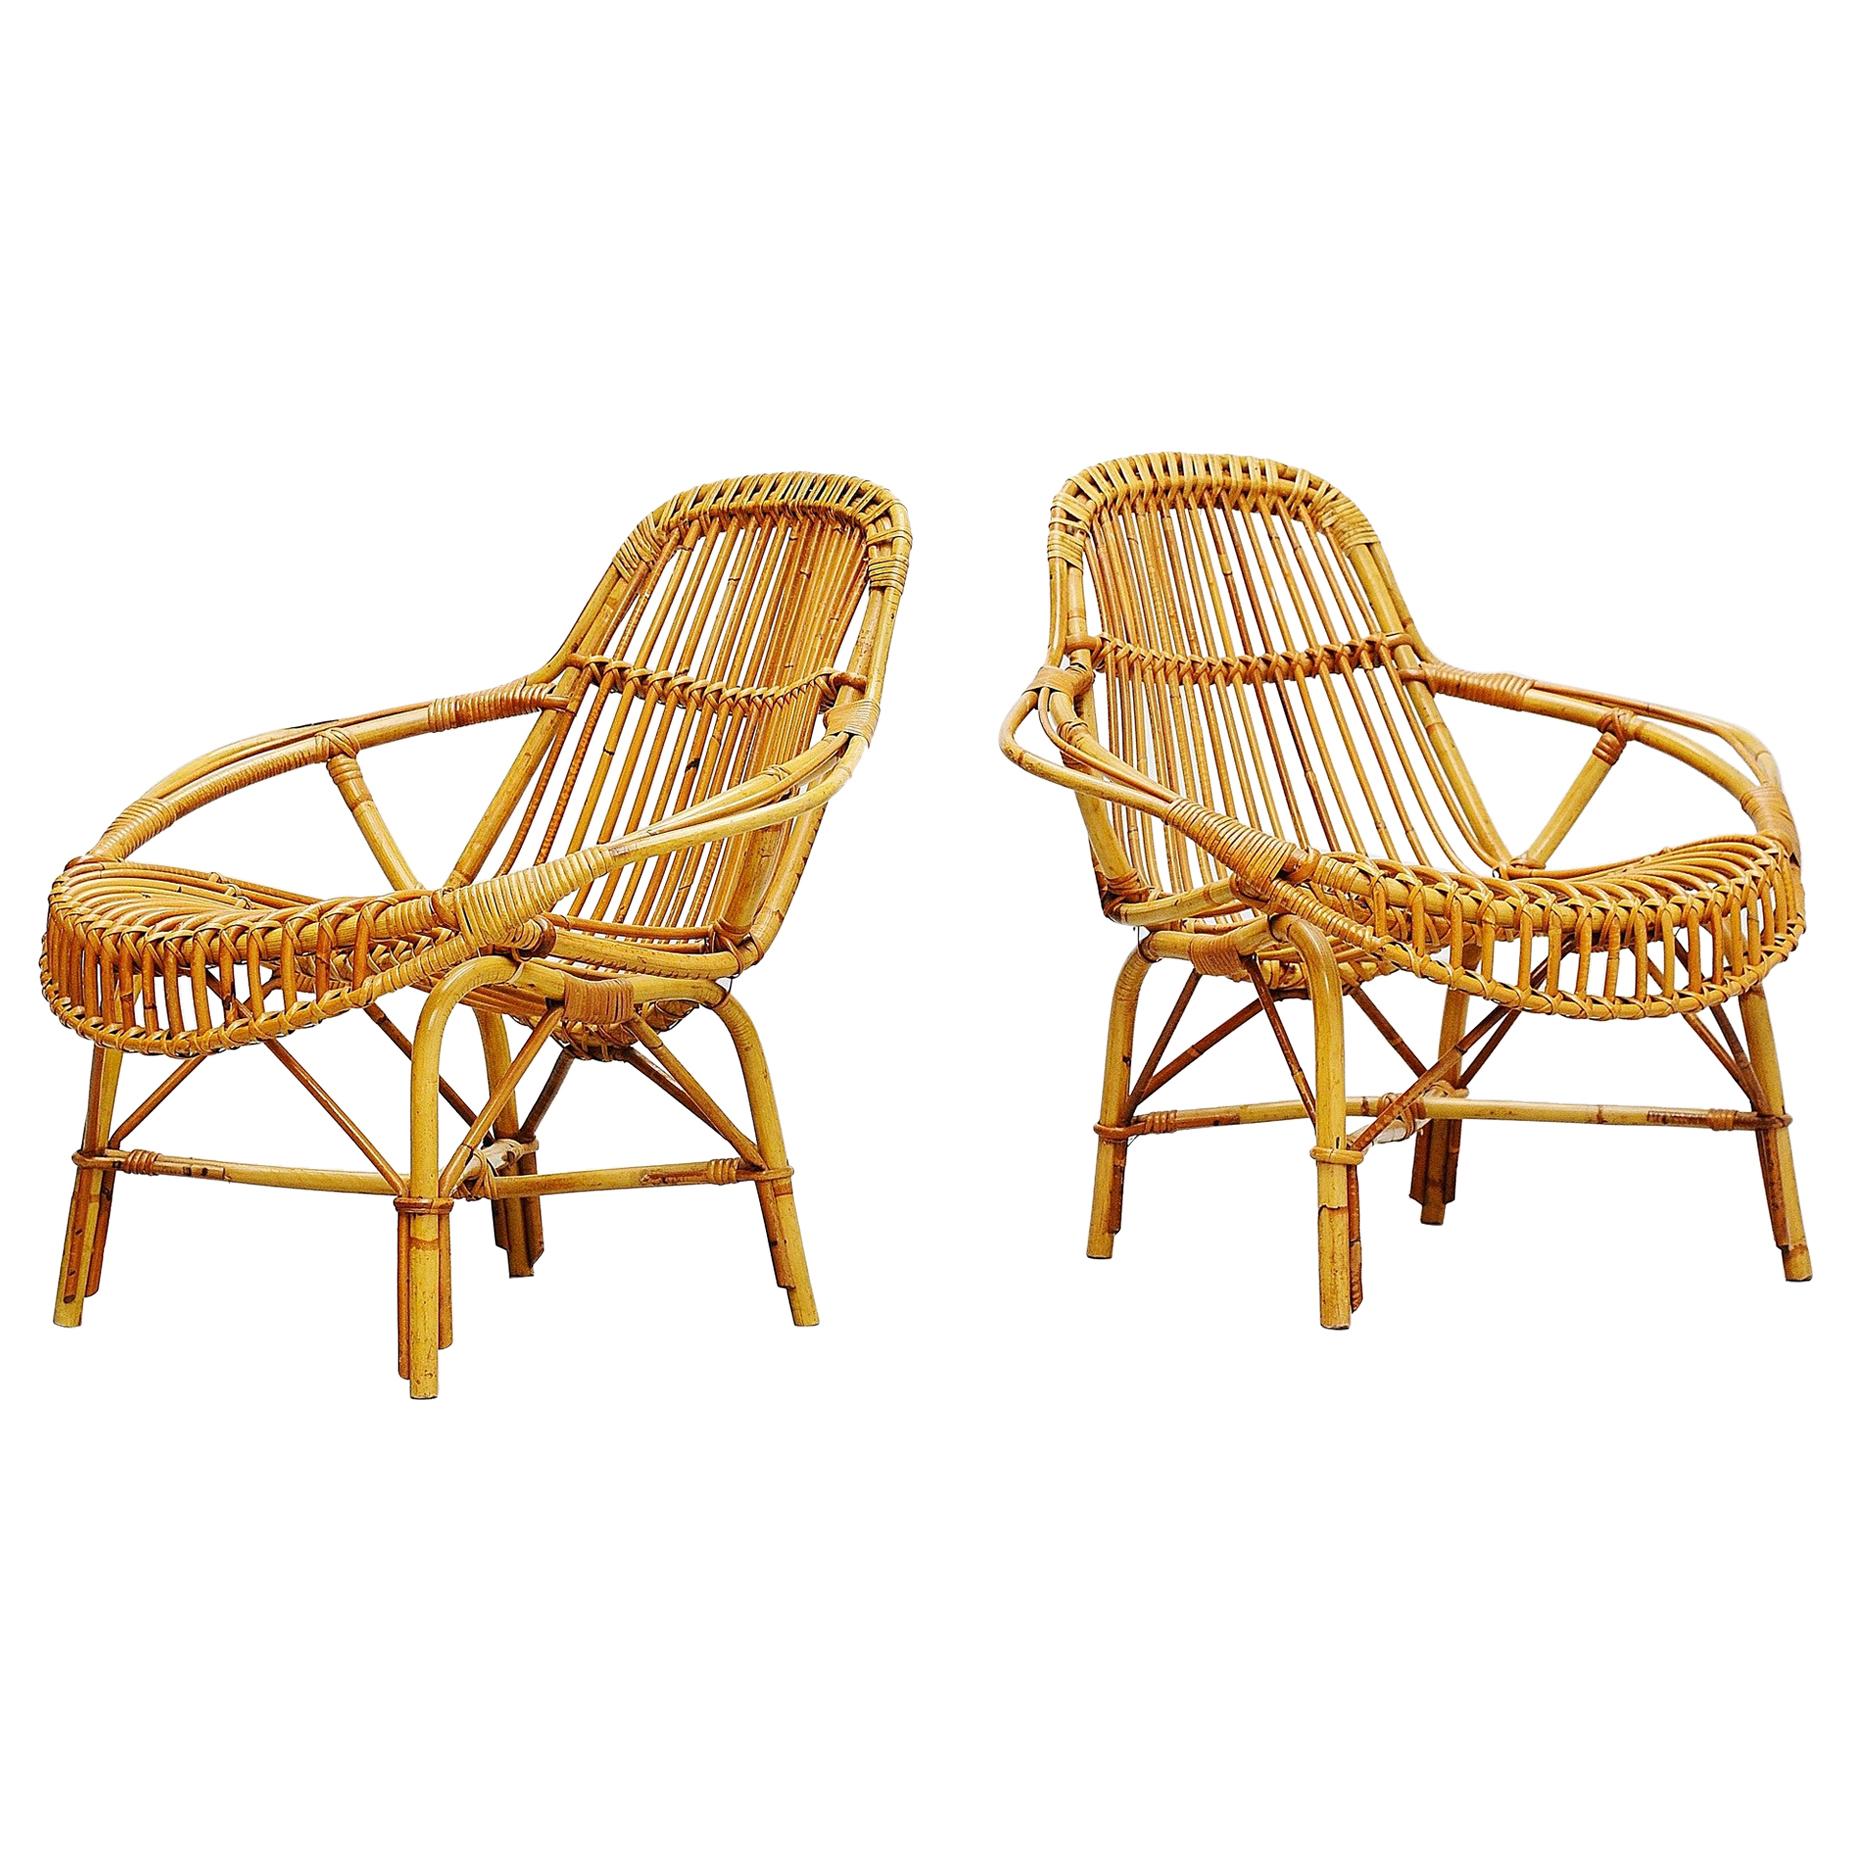 Janine Abraham Dirk Jan Rol Mantis Lounge Chairs, France, 1950s